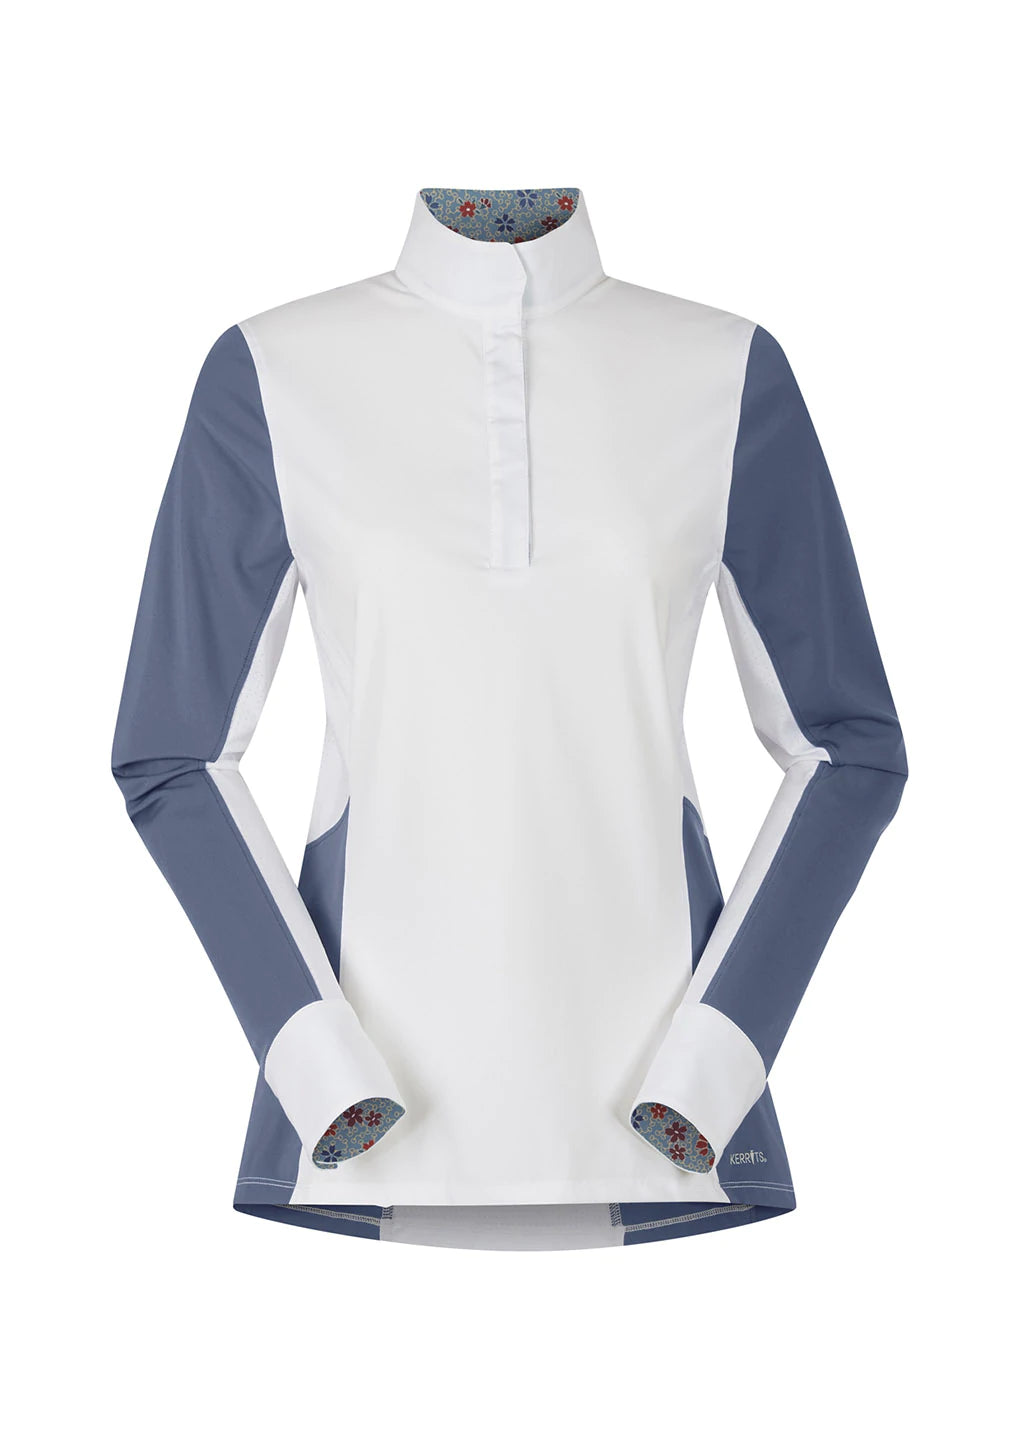 Kerrits Affinity® Long Sleeve Show Shirt